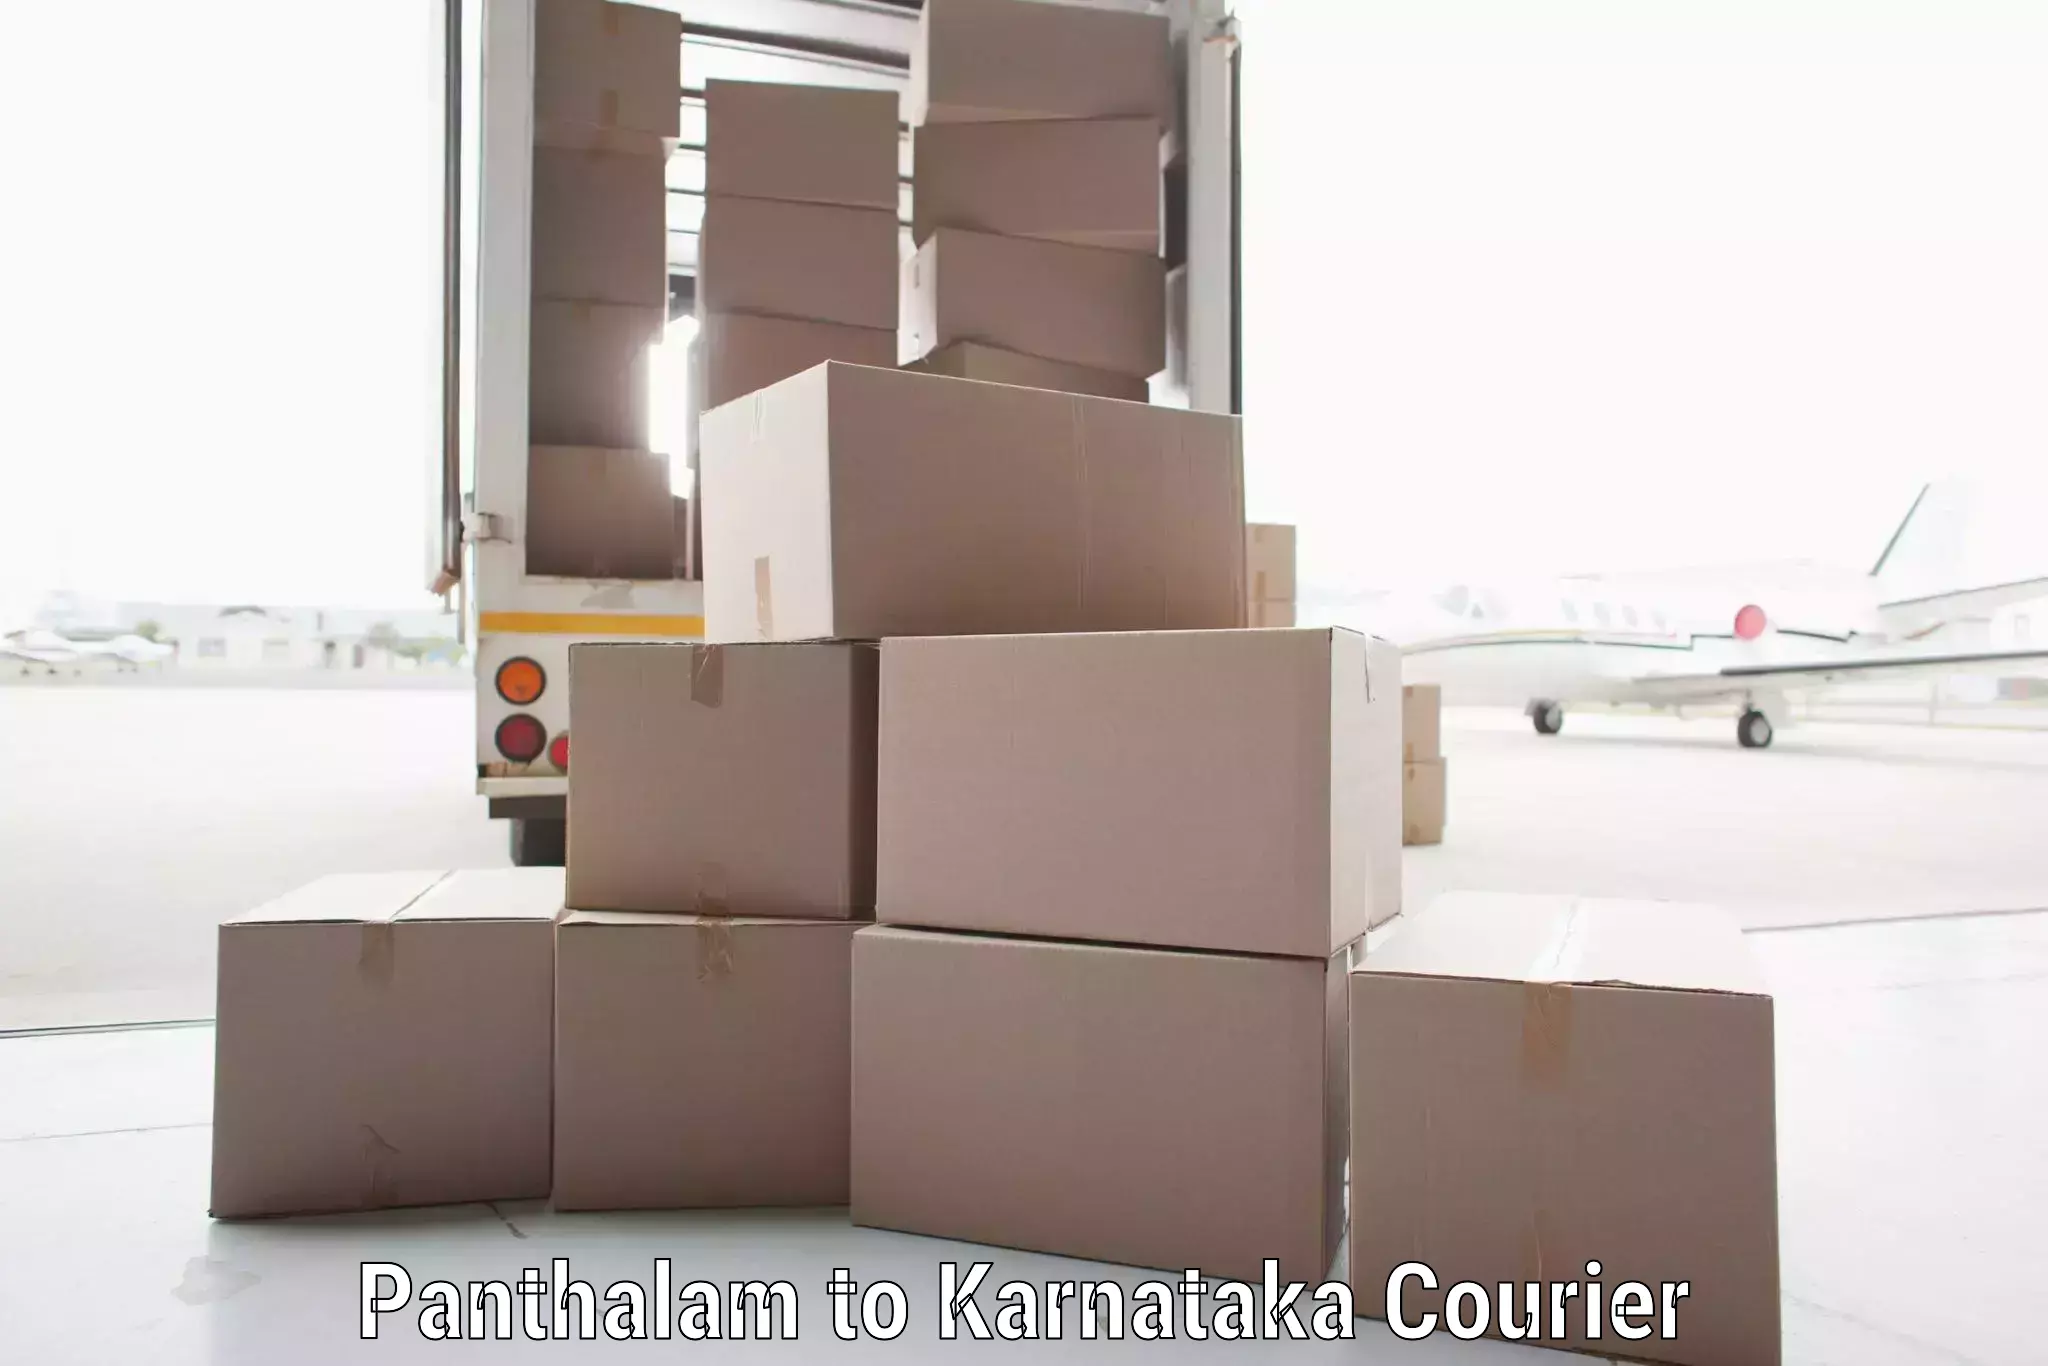 Advanced delivery network Panthalam to Karnataka